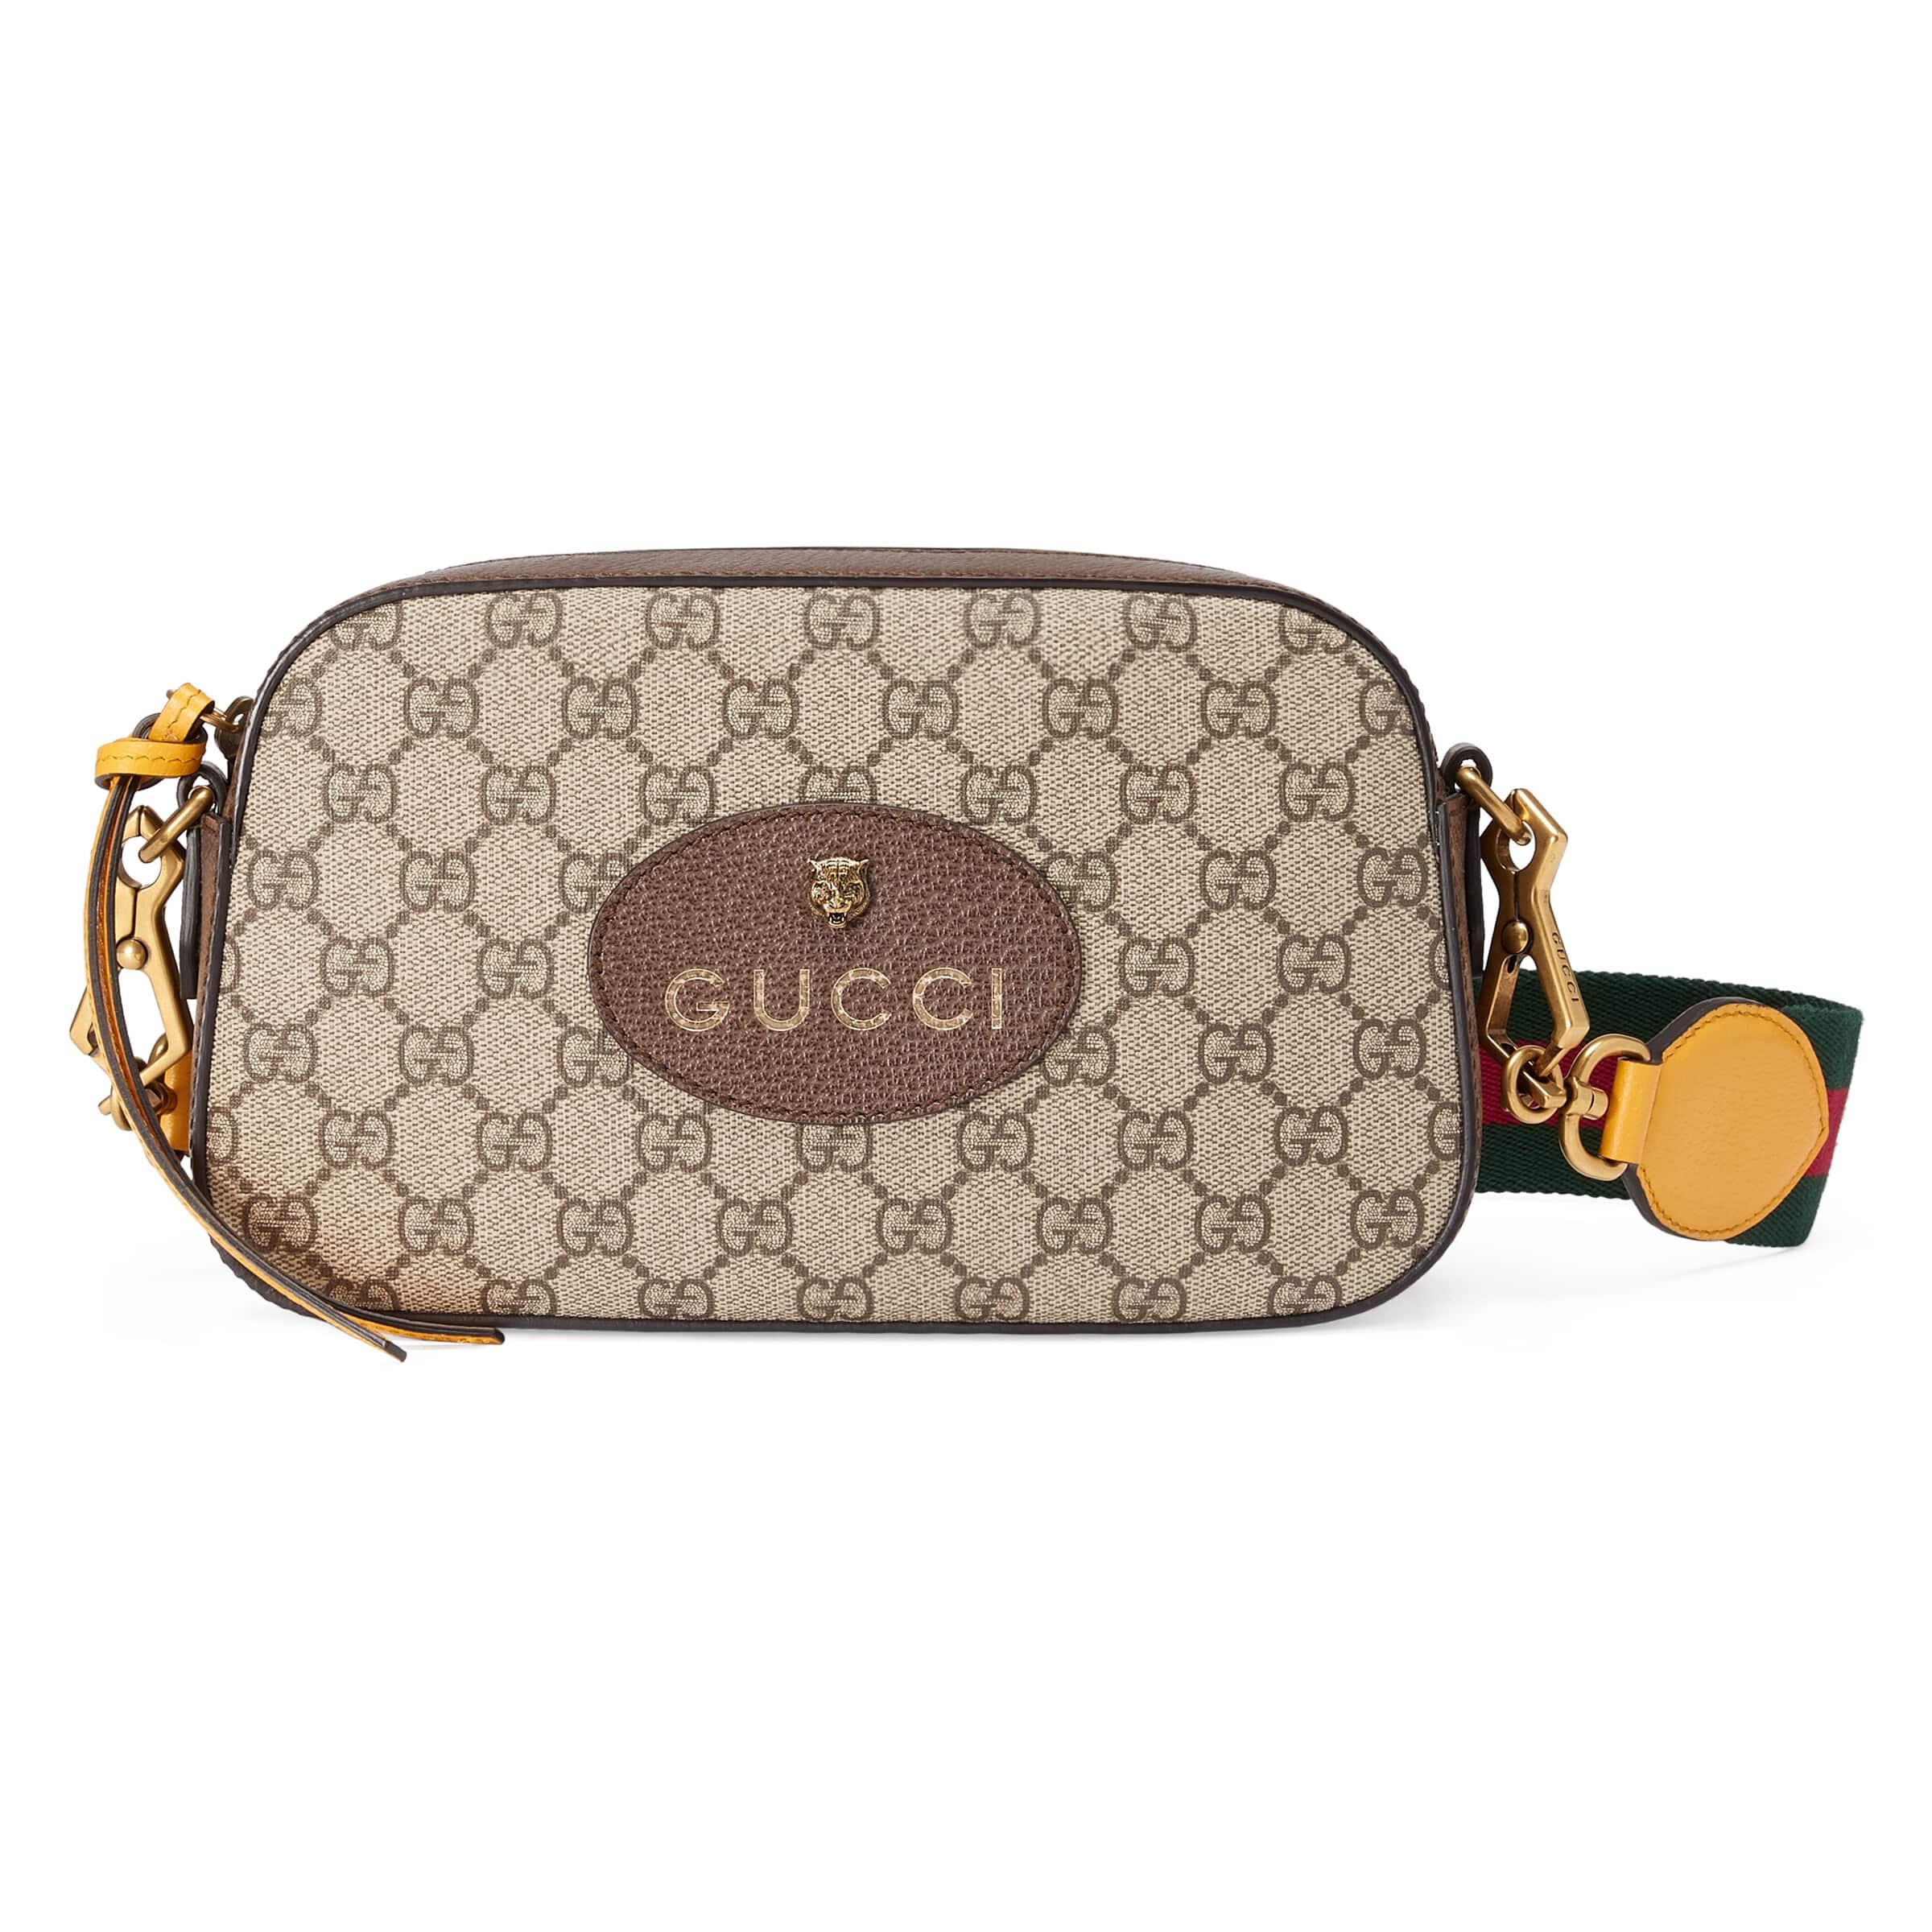 Gucci Neo Vintage GG Supreme Messenger Bag in Natural | Lyst